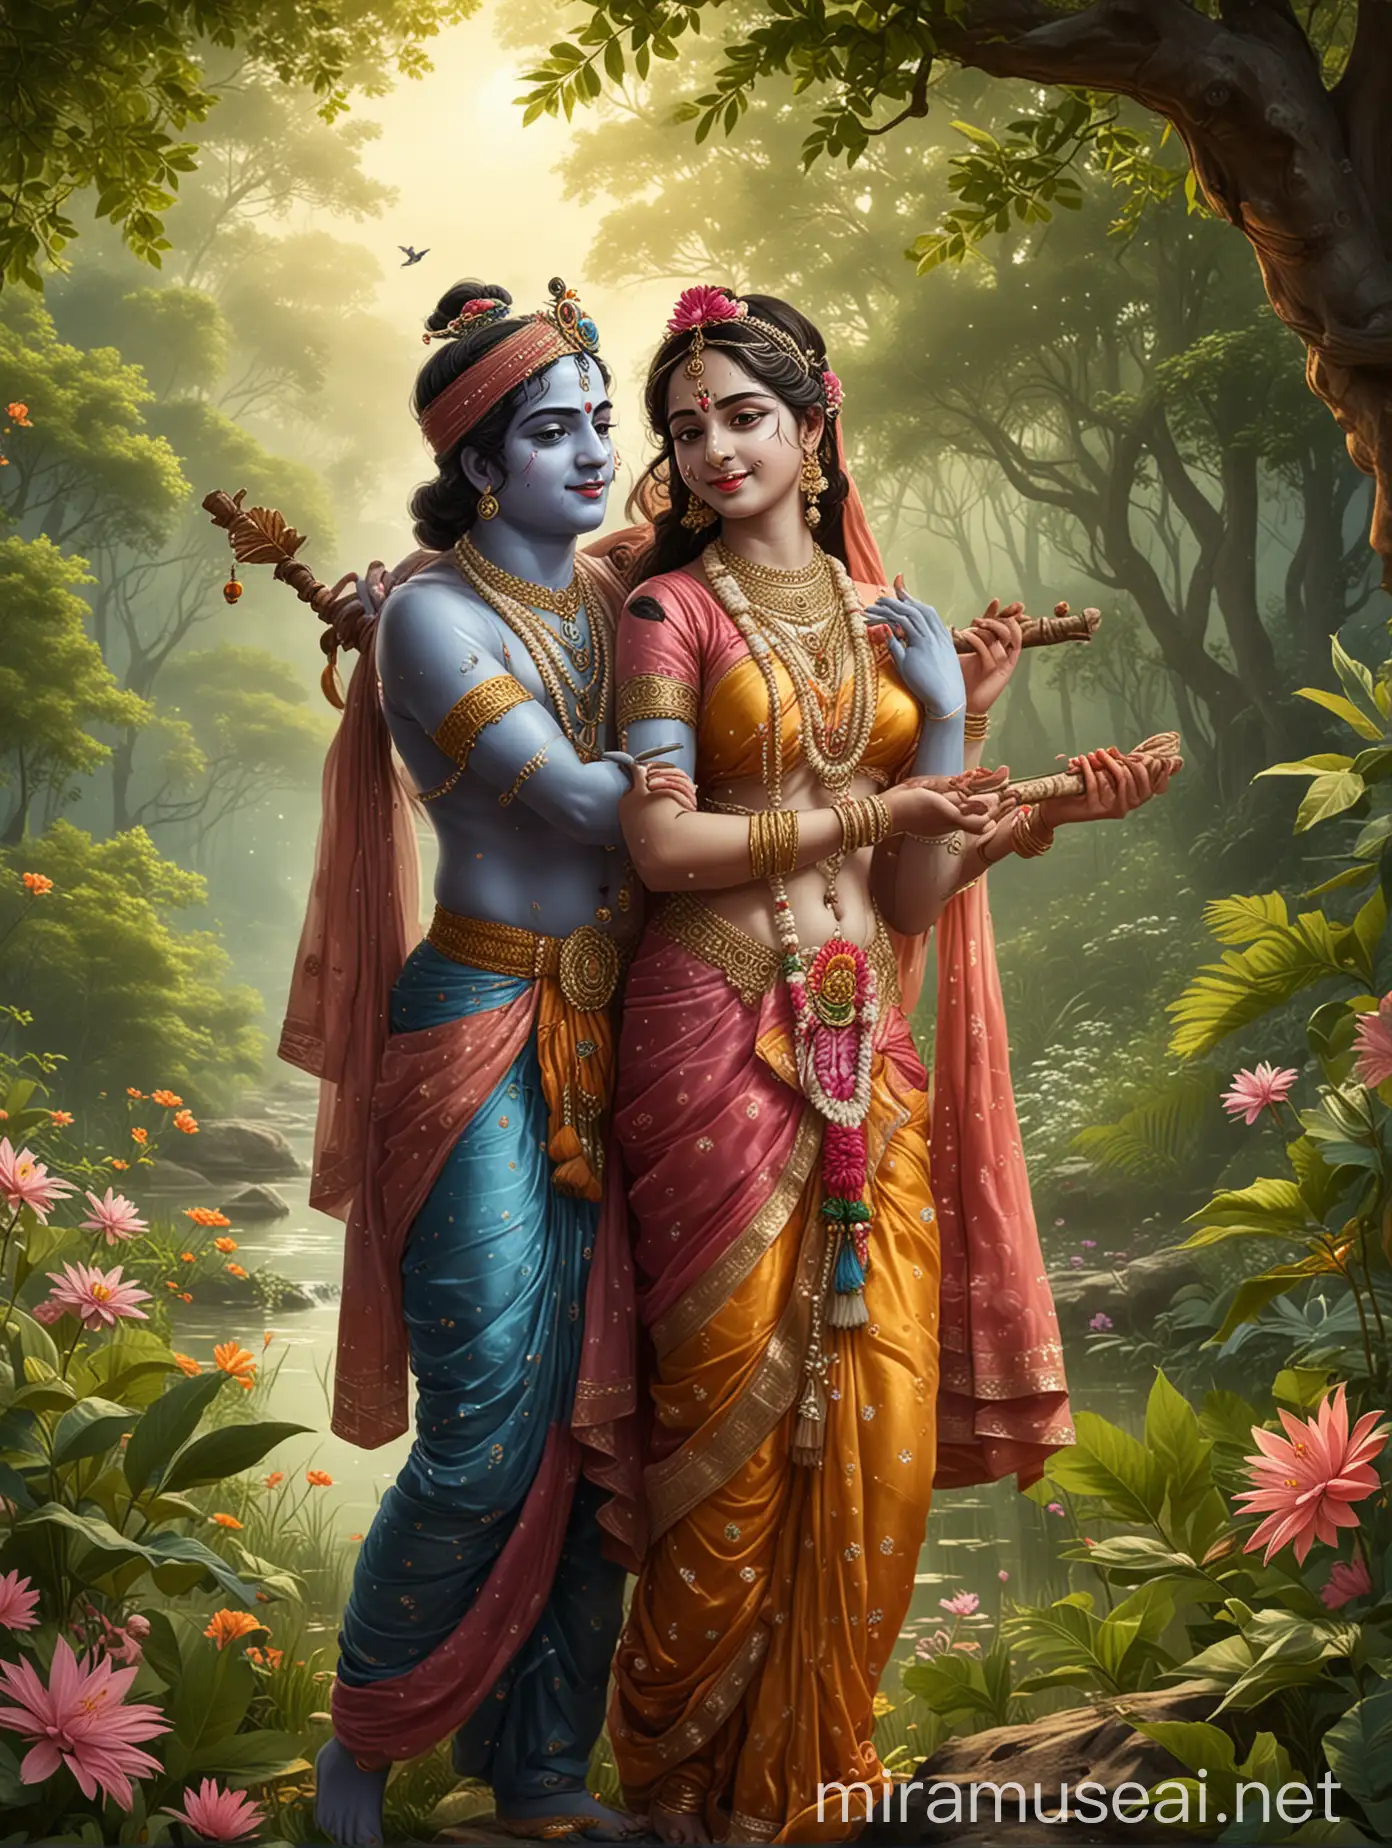 Divine Love Lord Krishna and Radha Embracing Amidst Nature